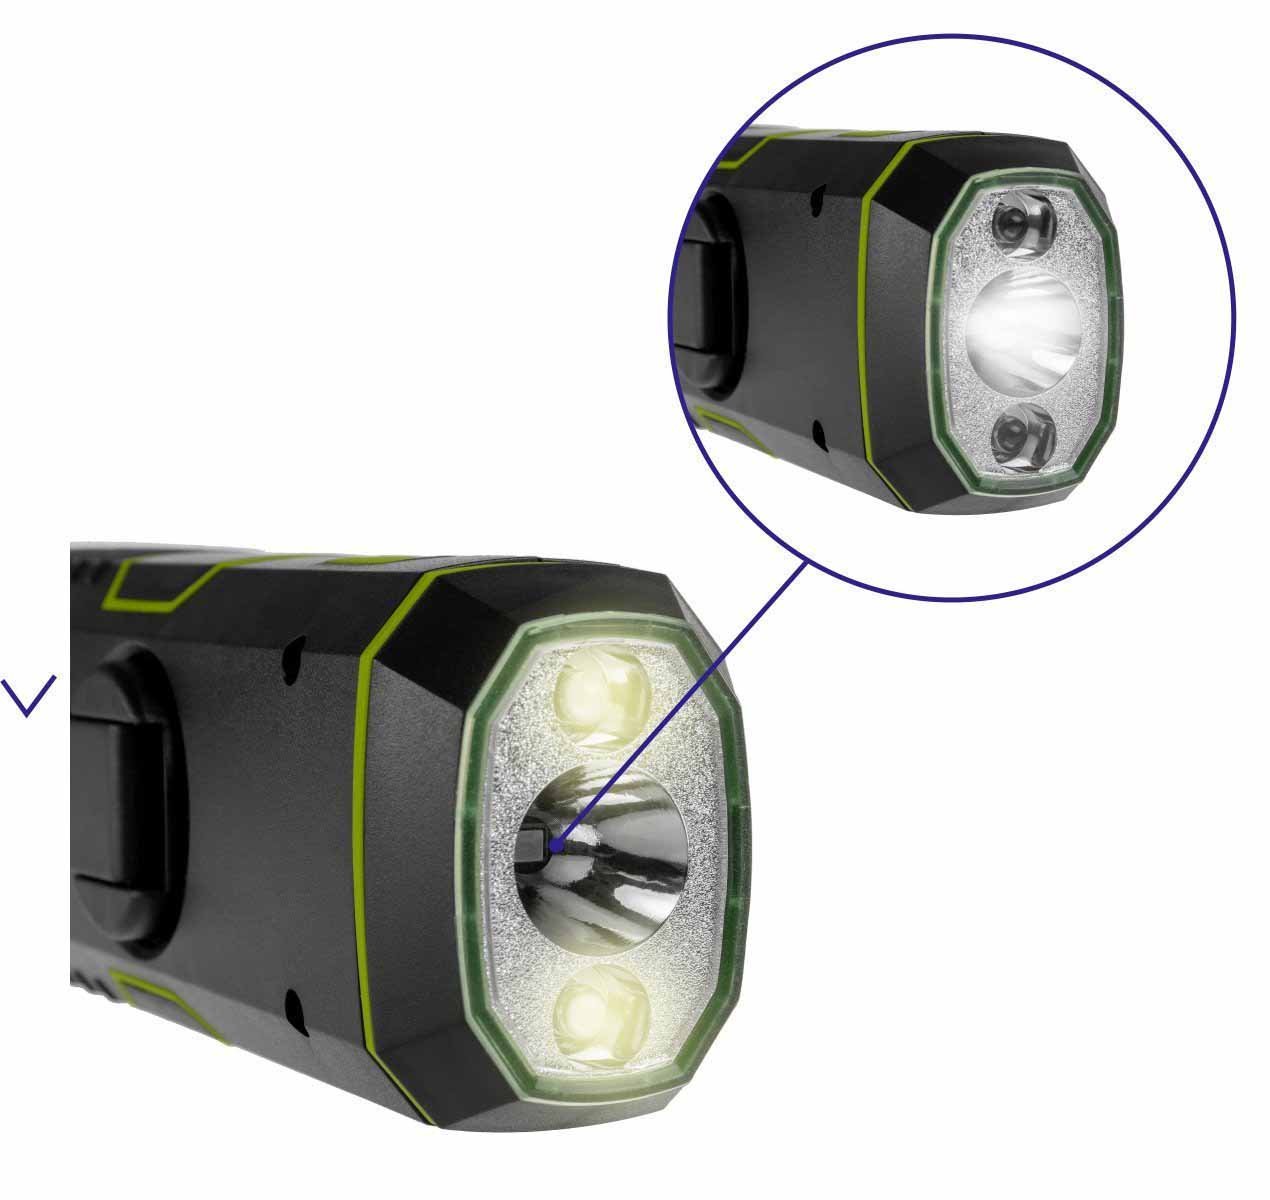 Portable Micro USB Radio Lantern is featuring different light configurations